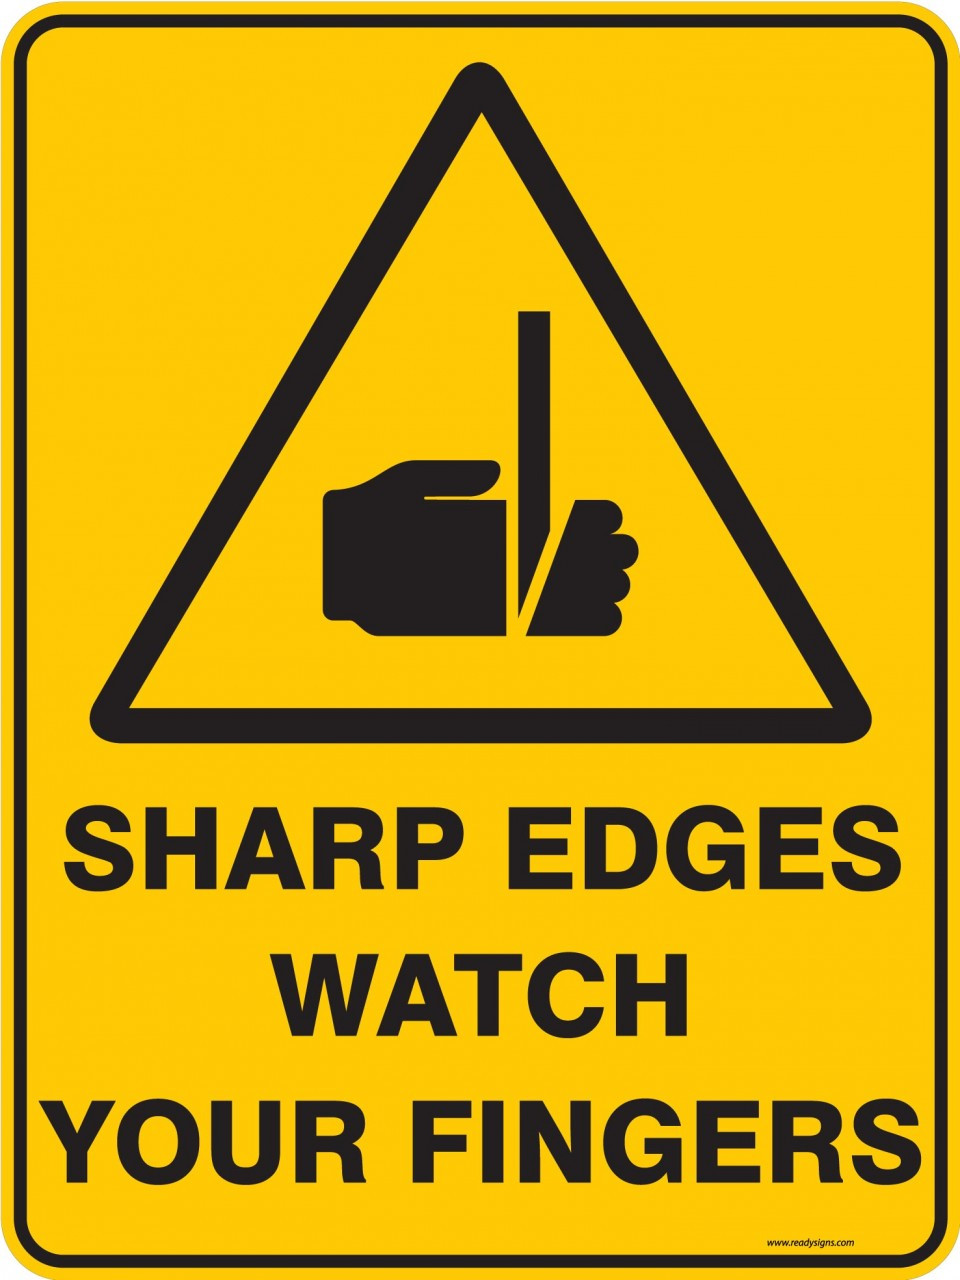 warning this sign has sharp edges